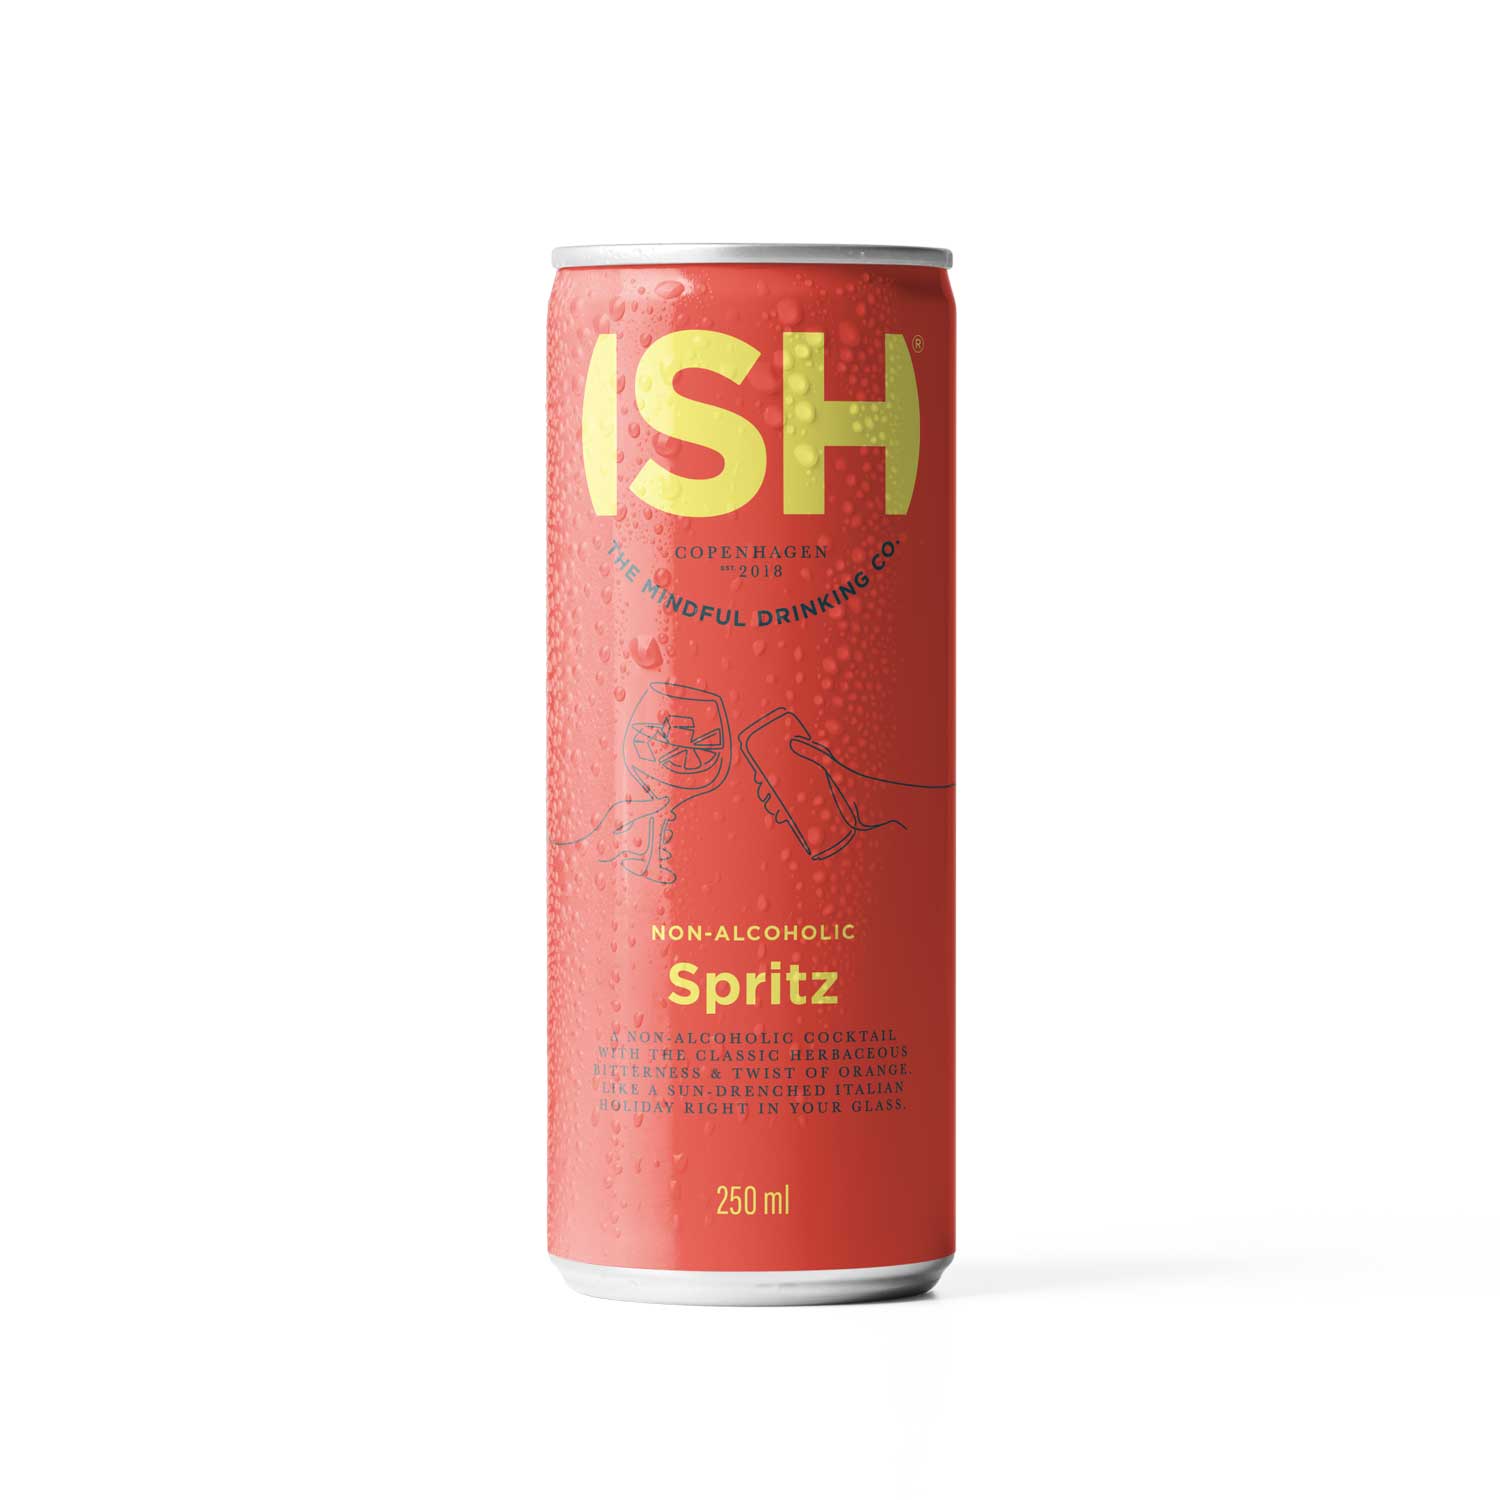 Spritz, non-alcoholic, 250 ml (extended)